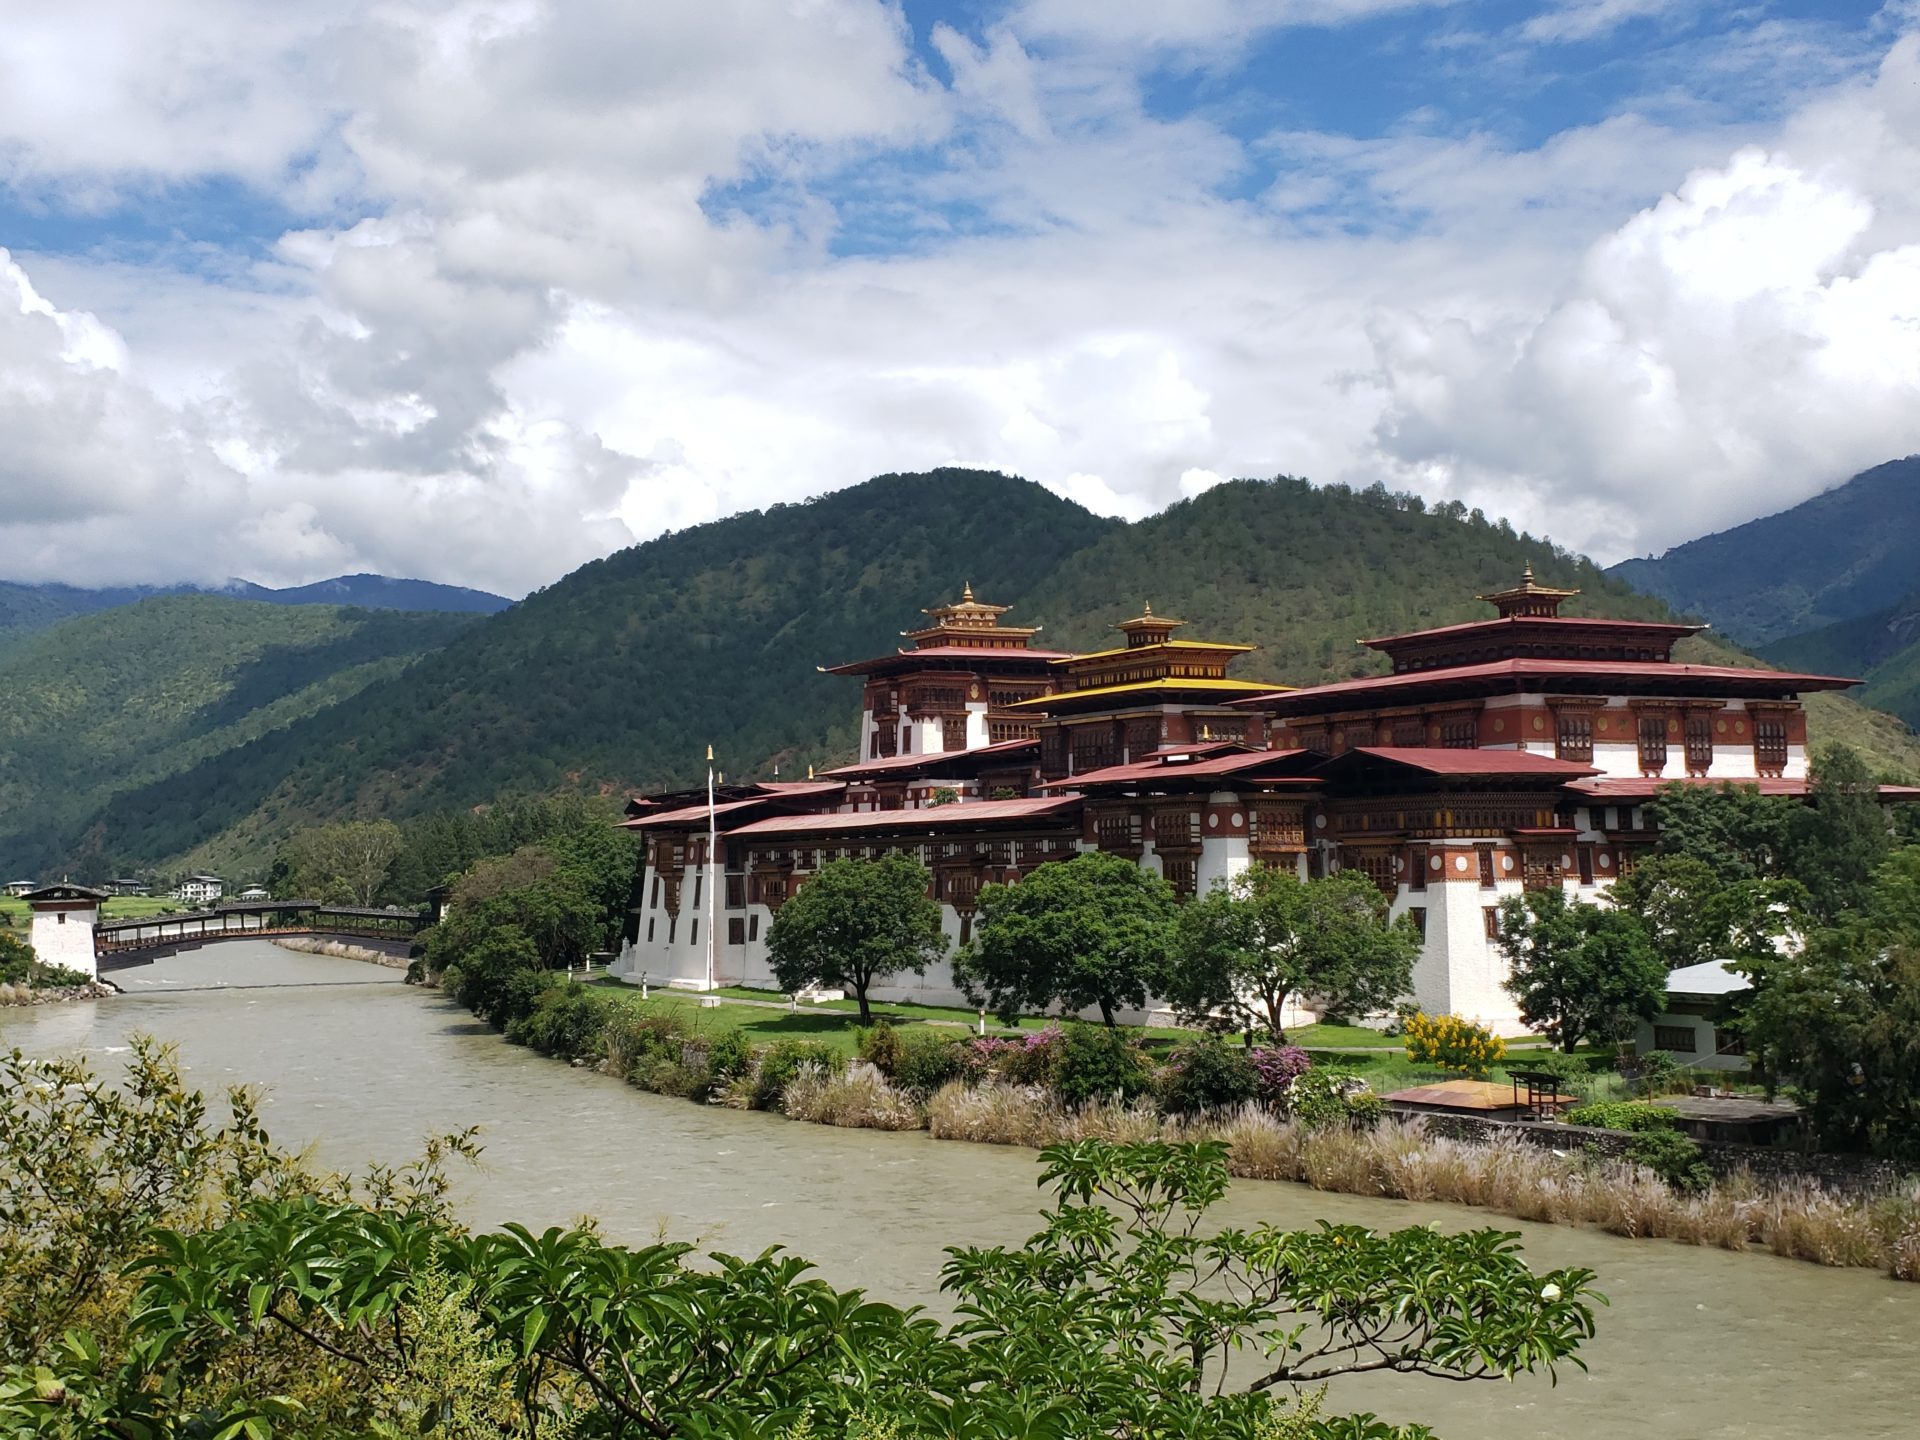 Punakha Dzong next to a river